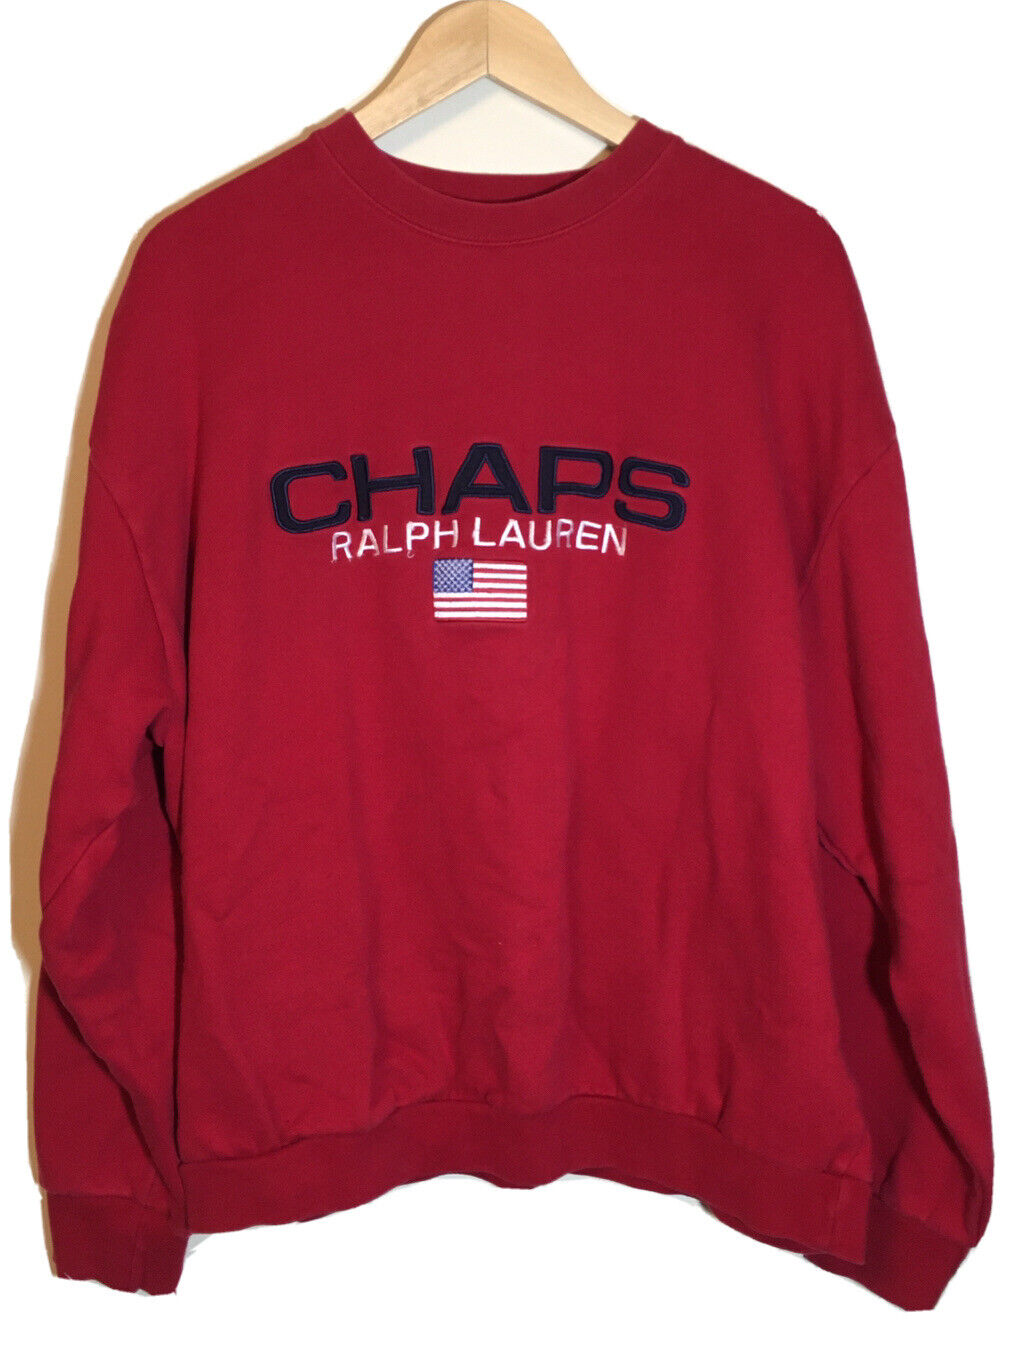 VTG Chaps Ralph Lauren USA Flag Embroidered Sweatshirt Red White Blue ...